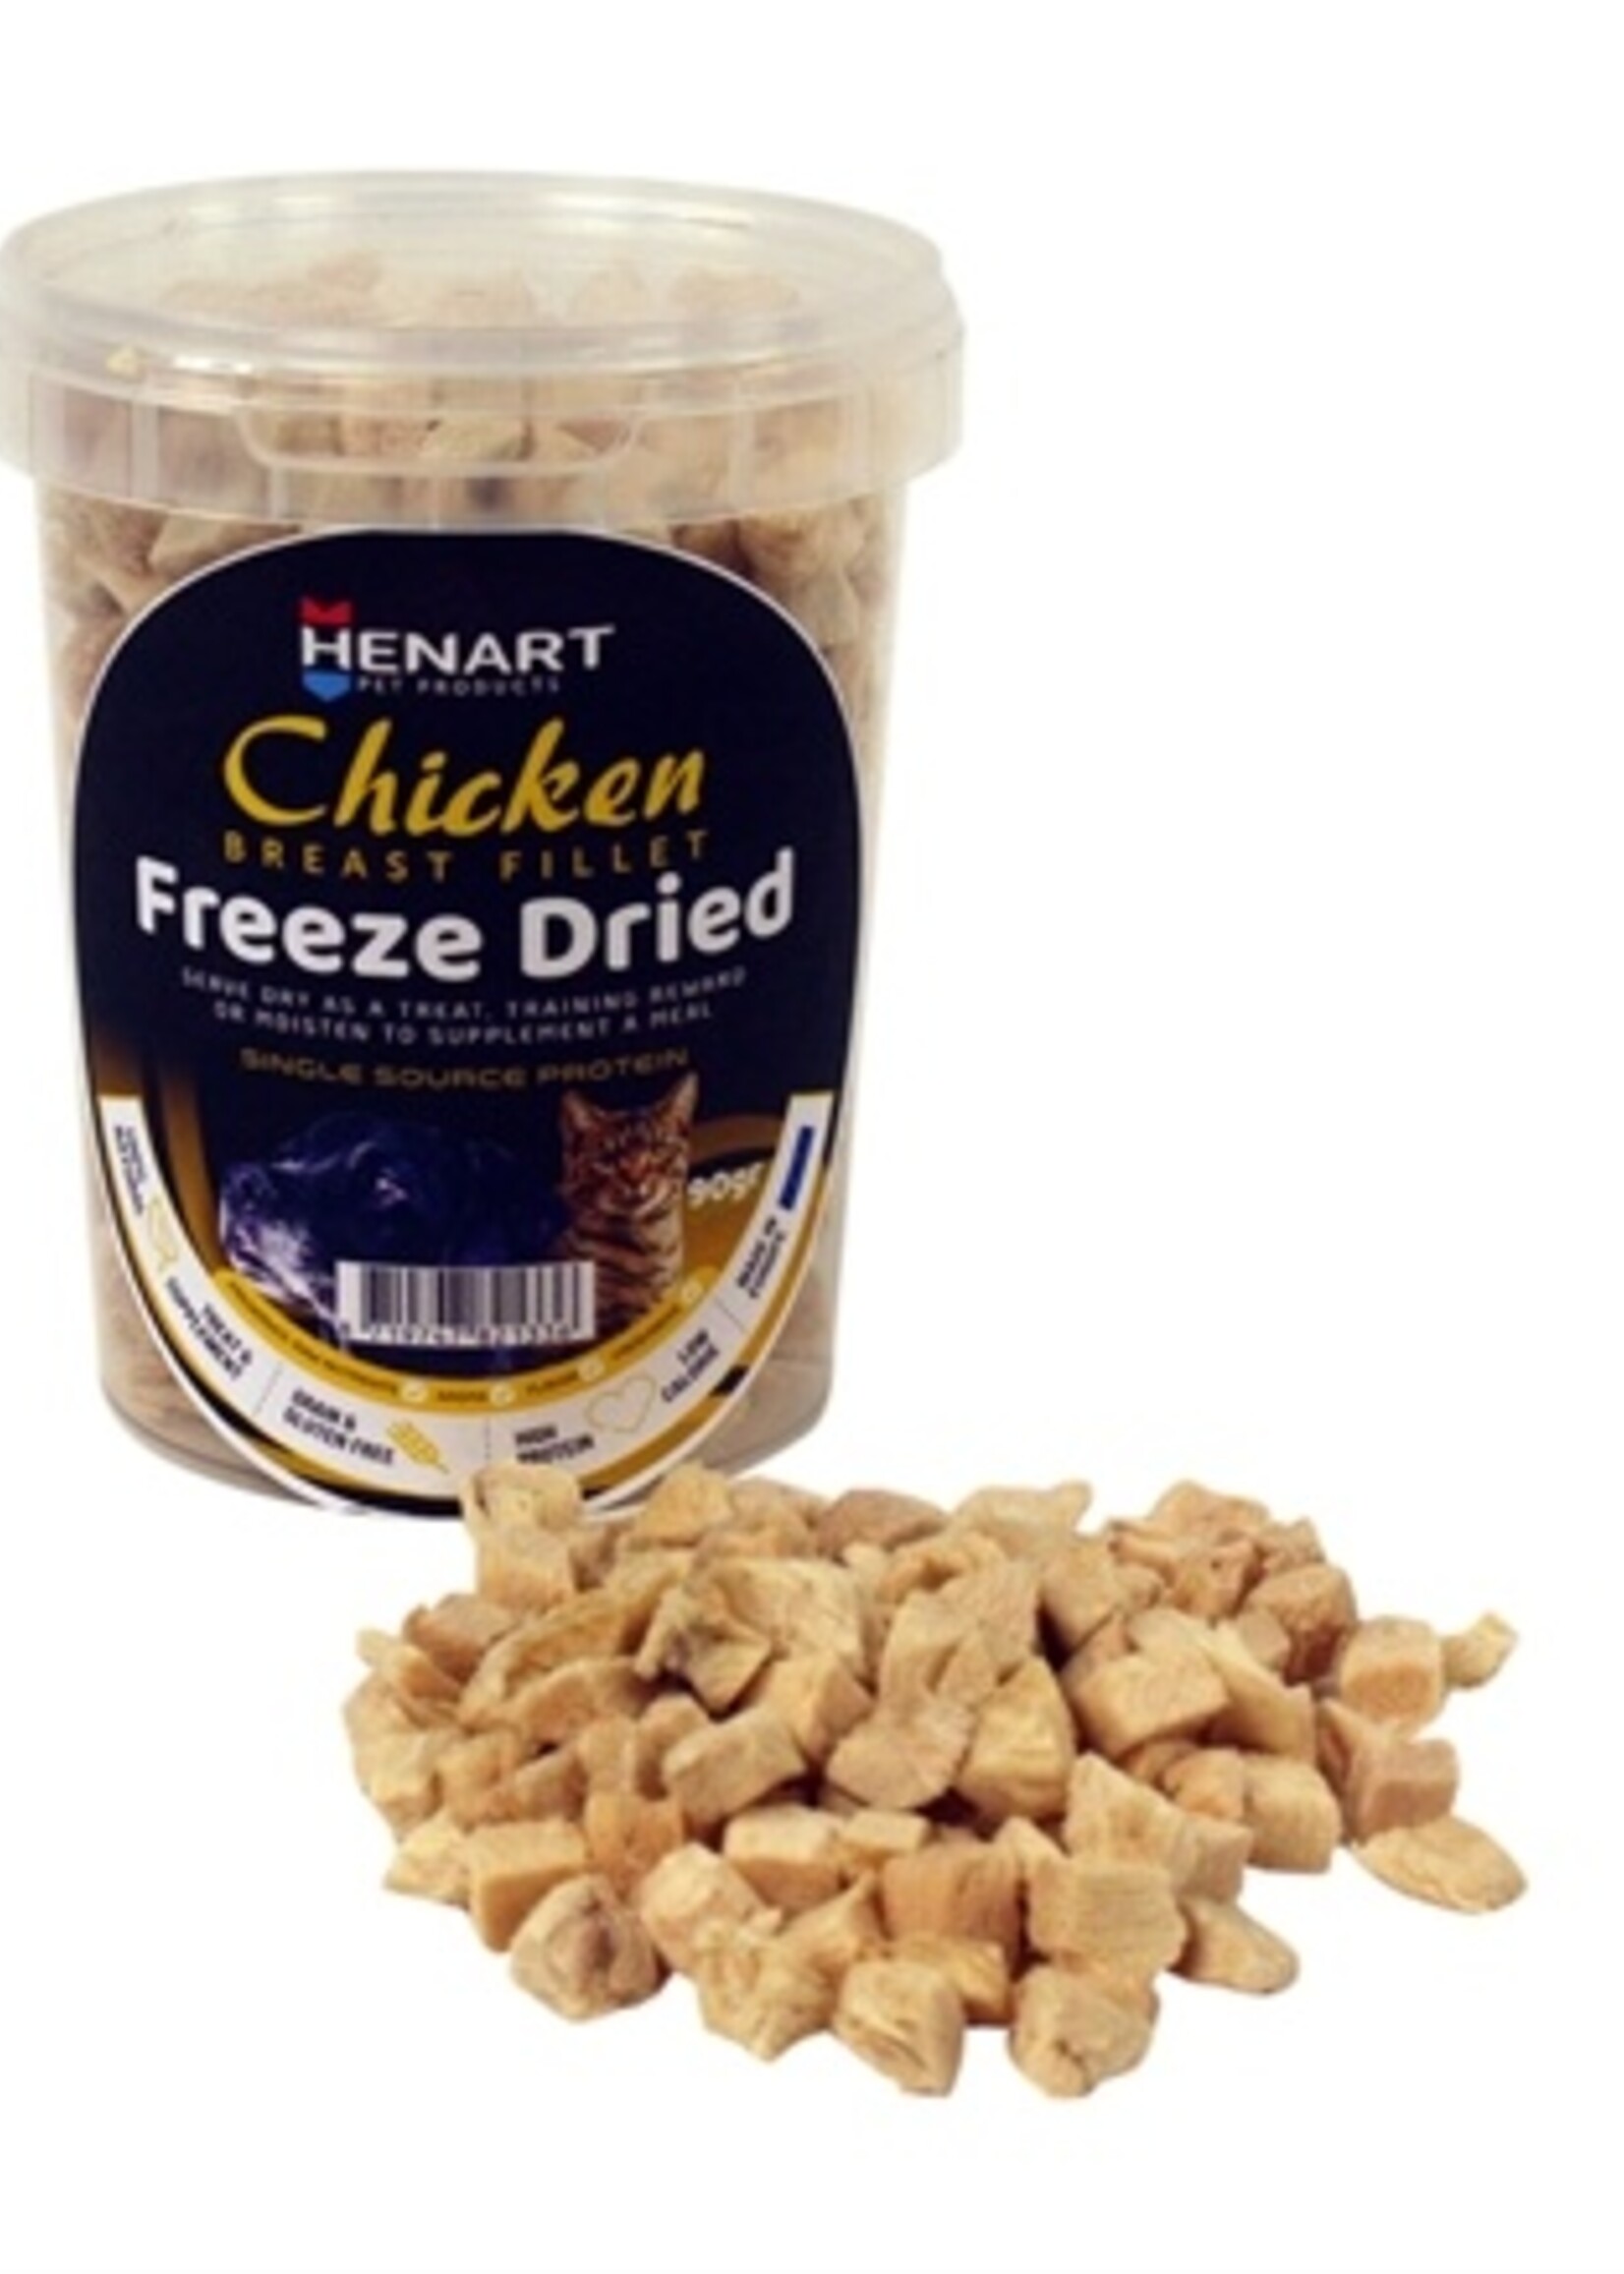 Henart Henart freeze dried chickenbreast fillet